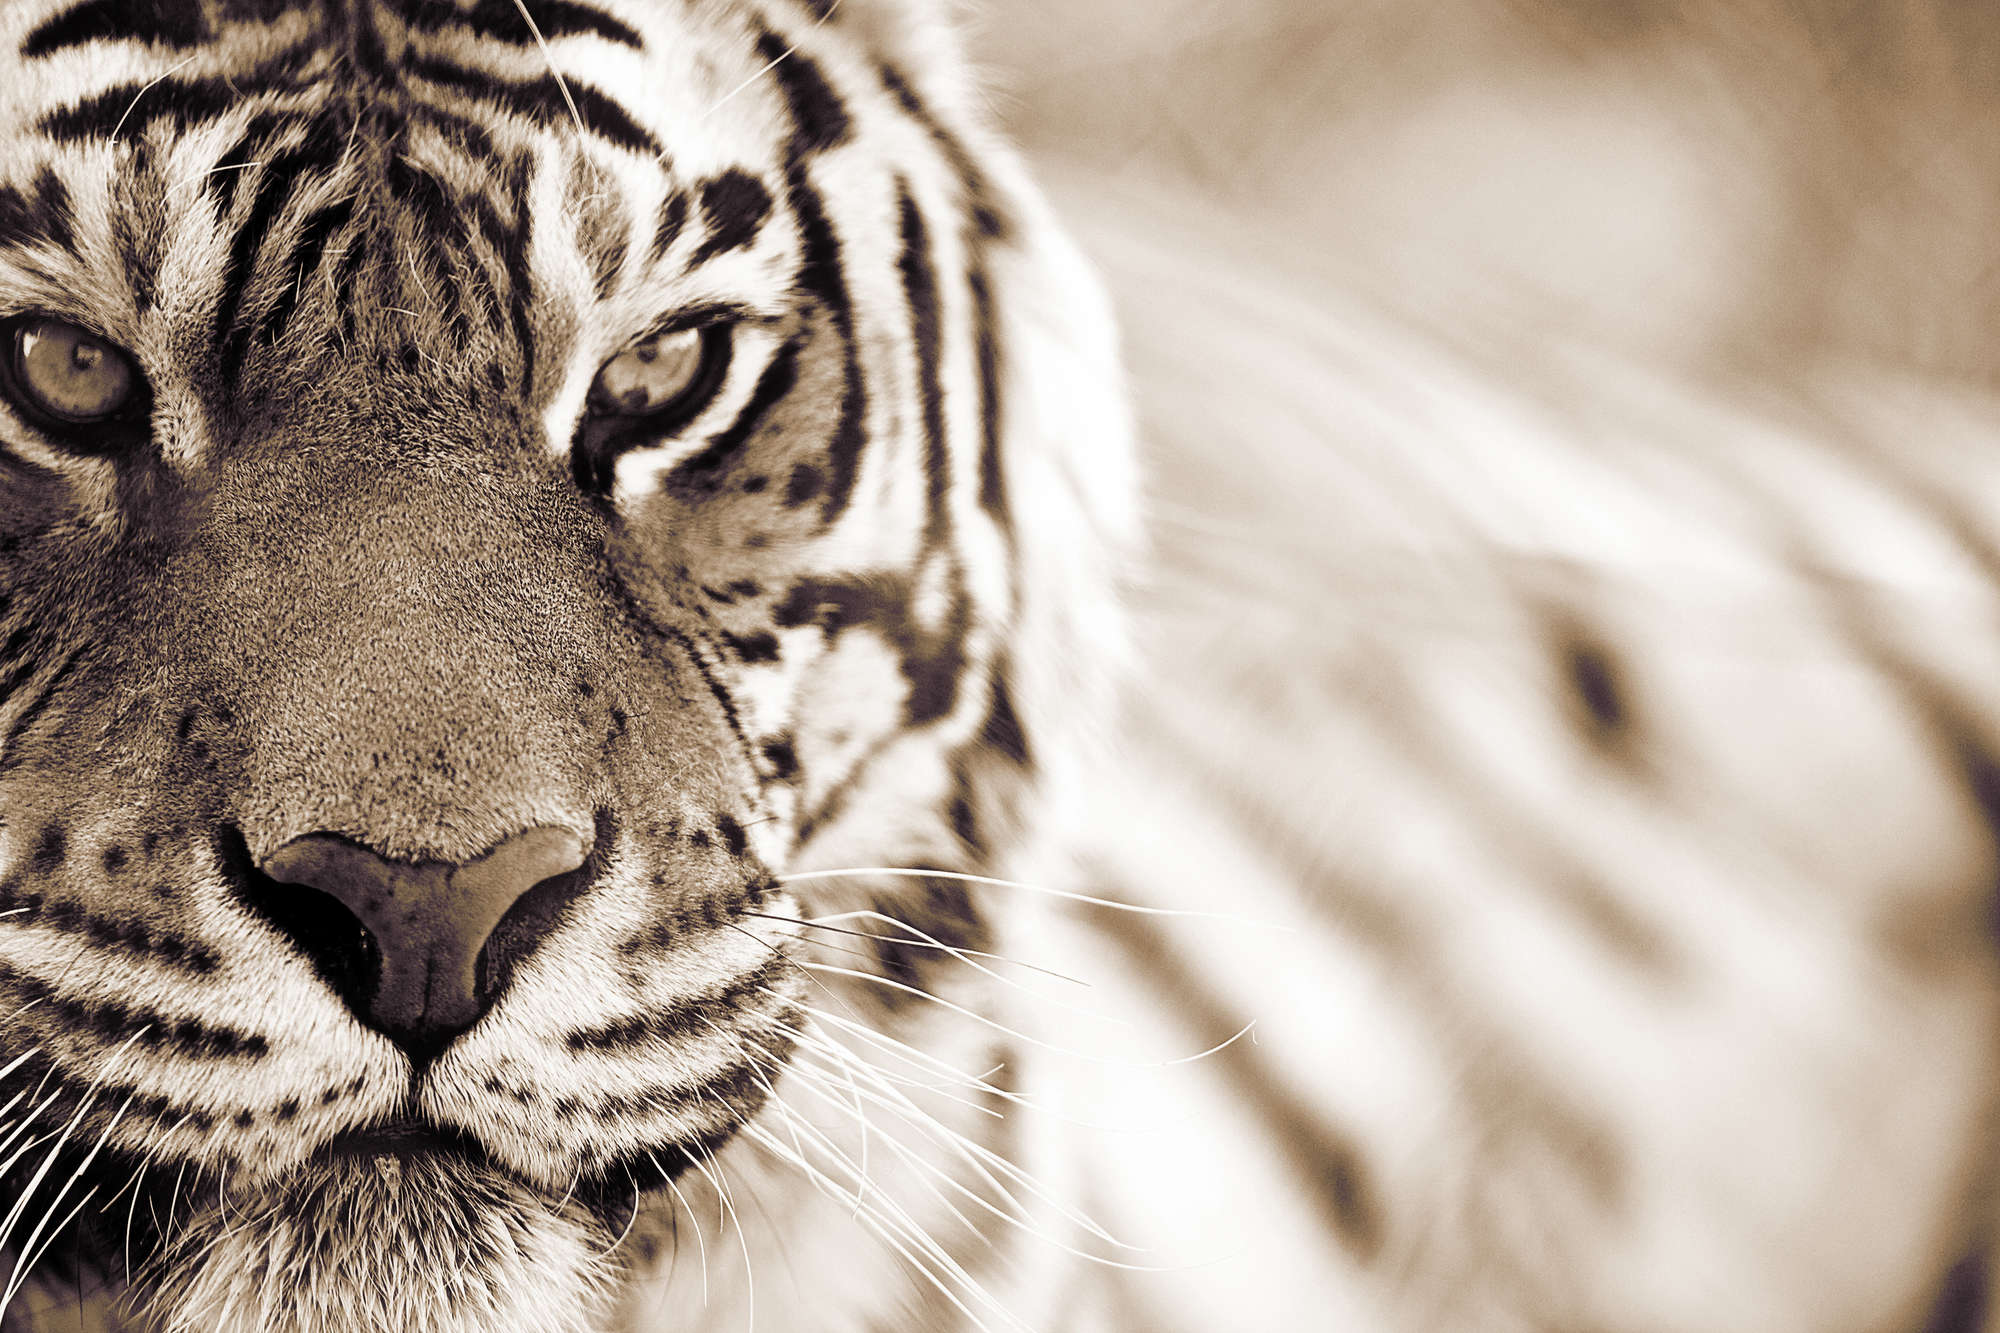             Carta da parati tigrata Close-up Outdoor su vello liscio in madreperla
        